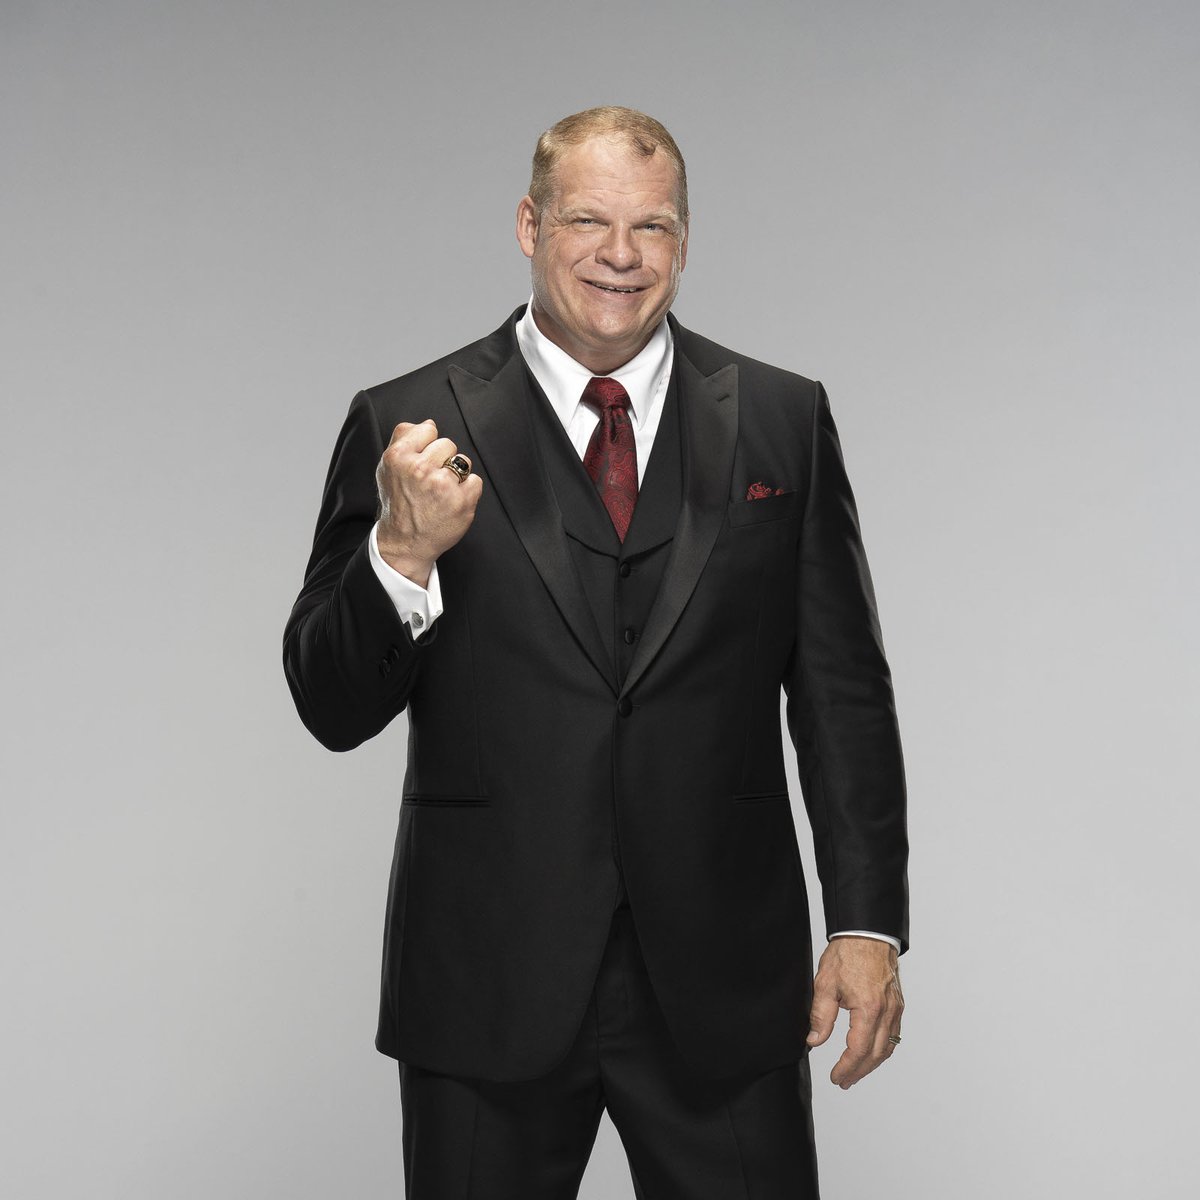 Happy birthday to WWE Hall of Famer @KaneWWE!